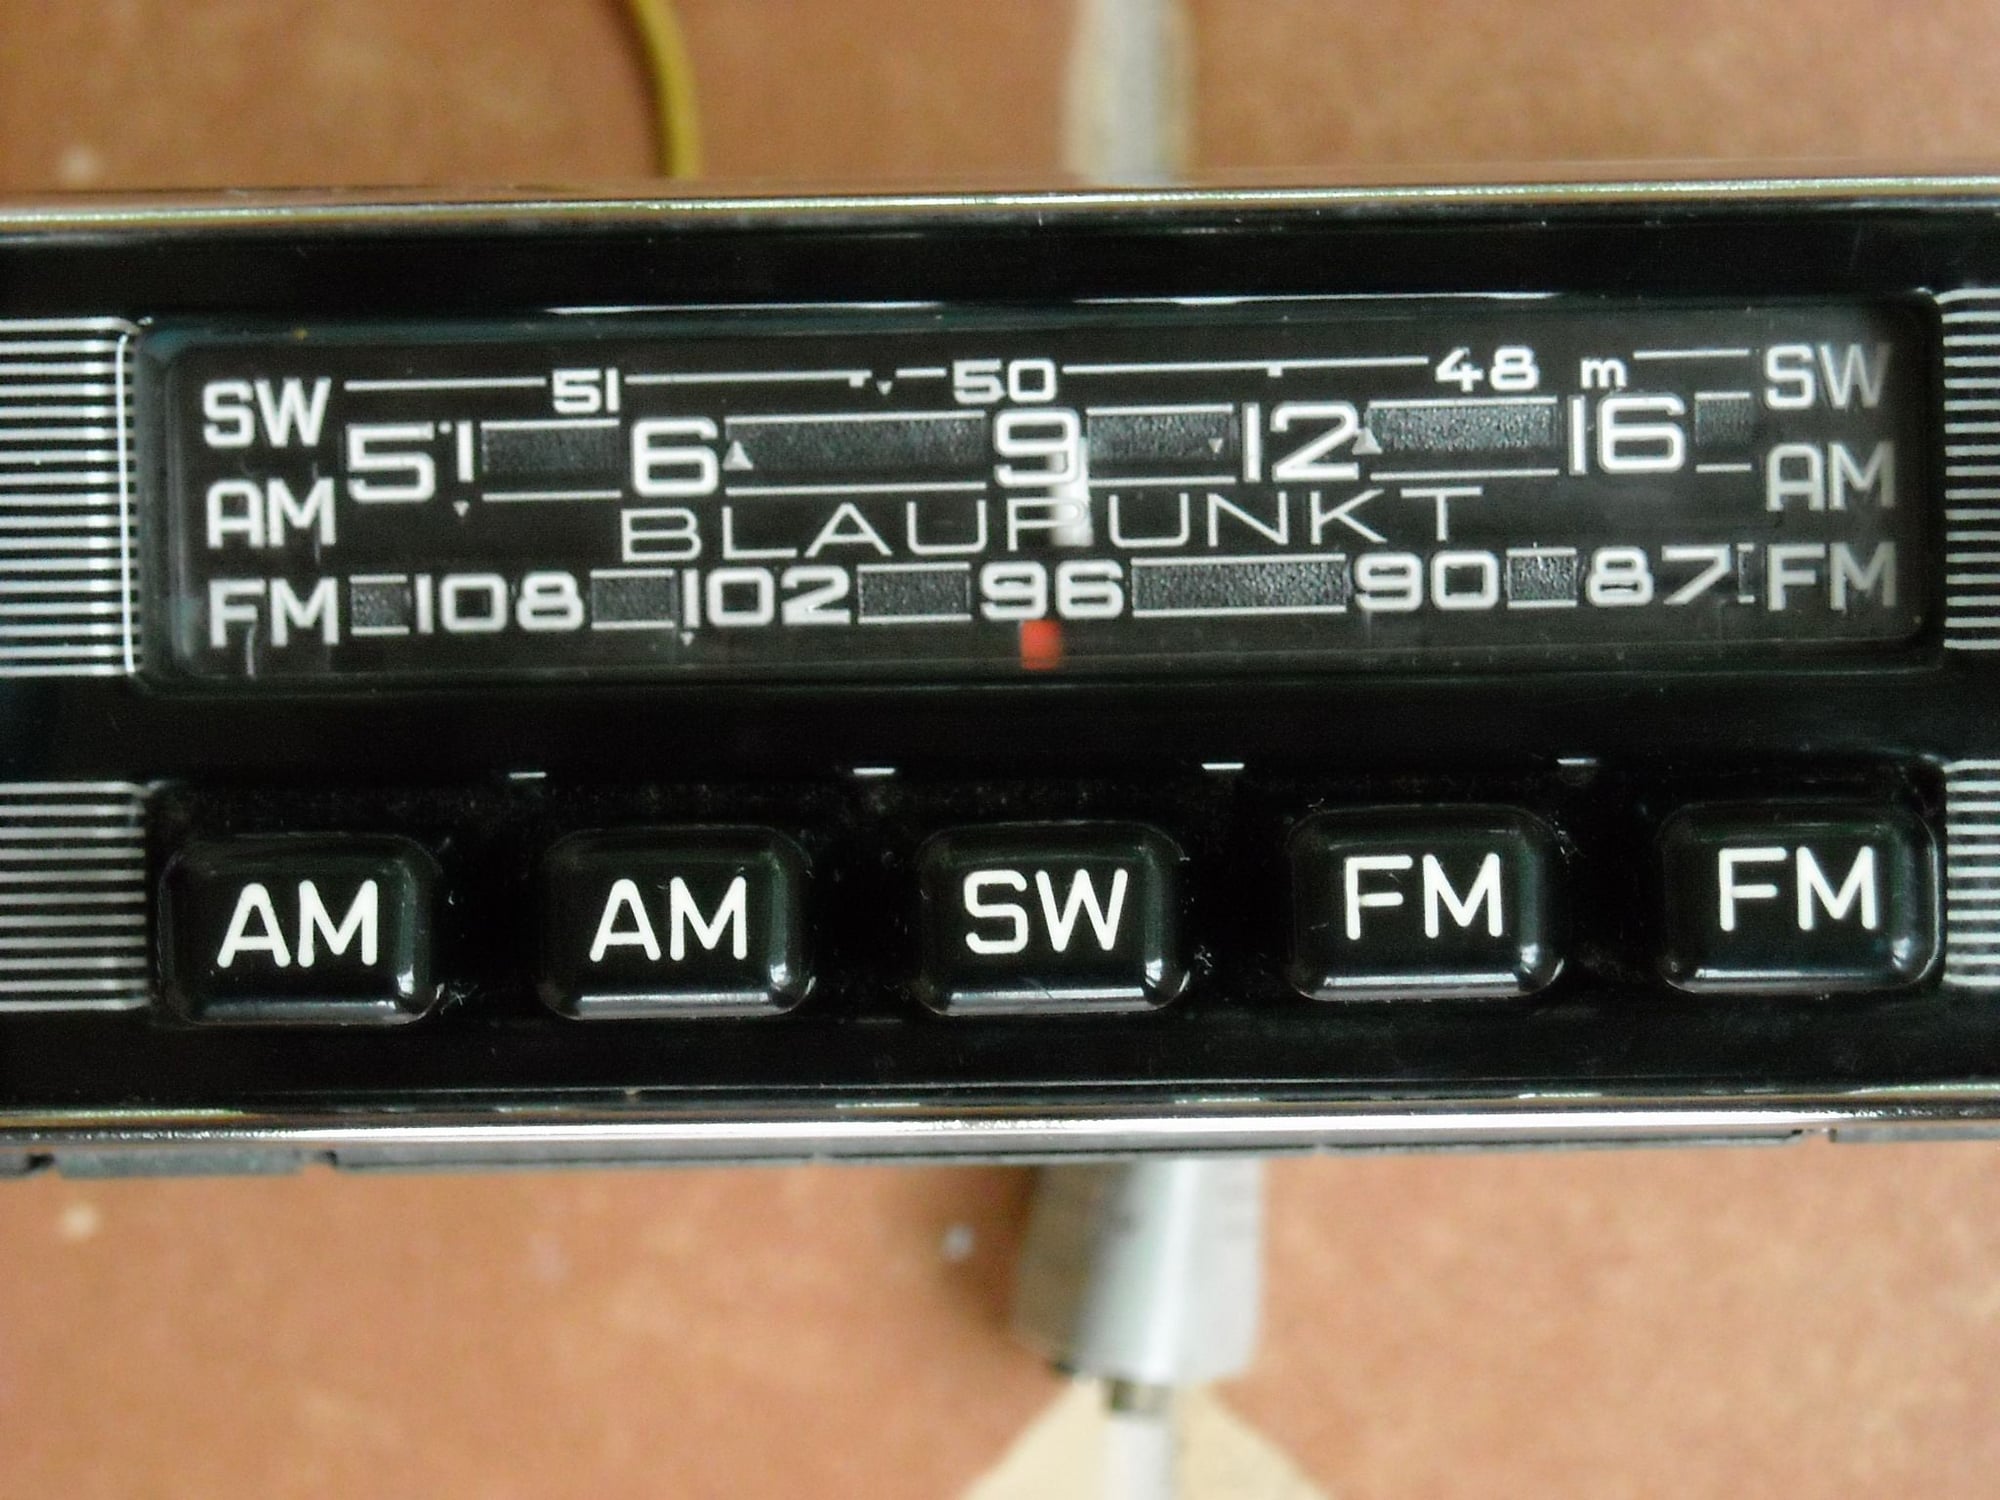 Audio Video/Electronics - Blaupunkt Frankfurt US (S) model 1968-1969 Z serial number - 3 band version. - Used - Ny, NY 10101, United States